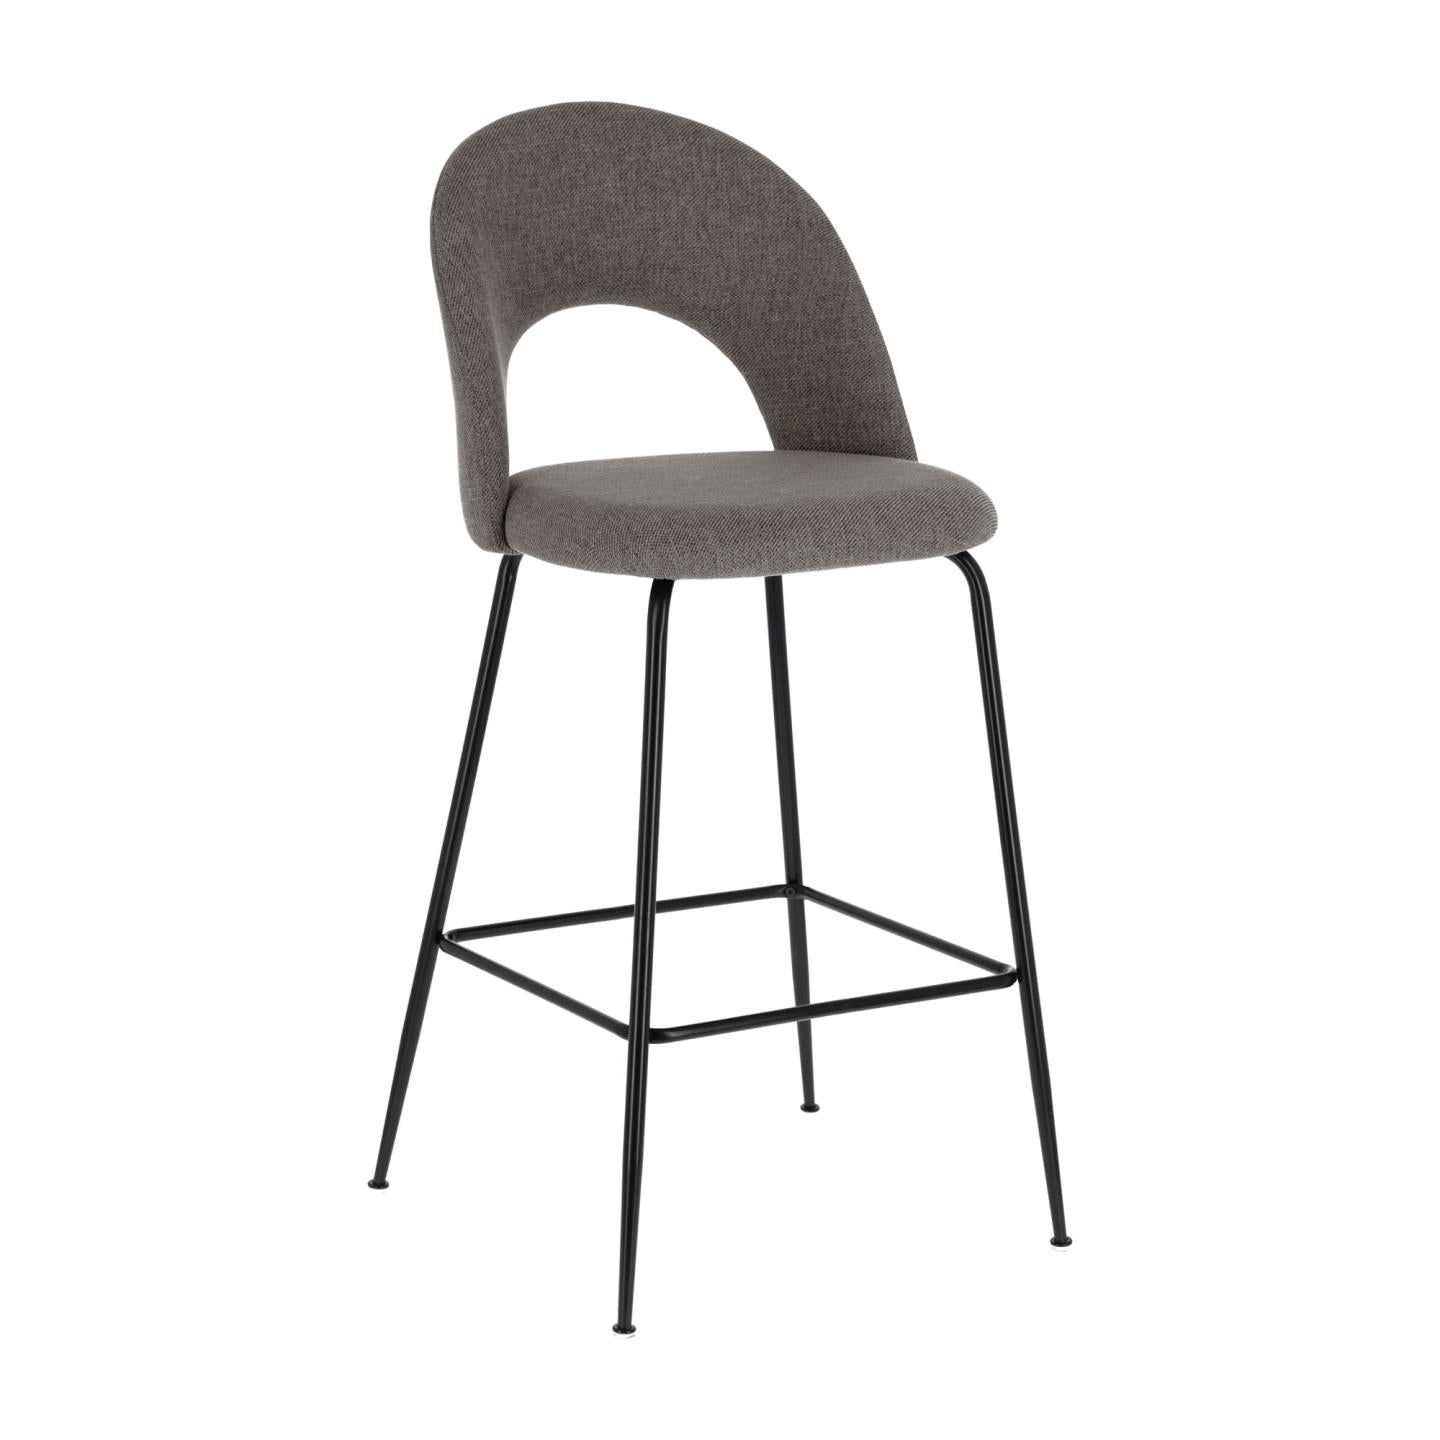 Mahalia dark grey stool height 65 cm